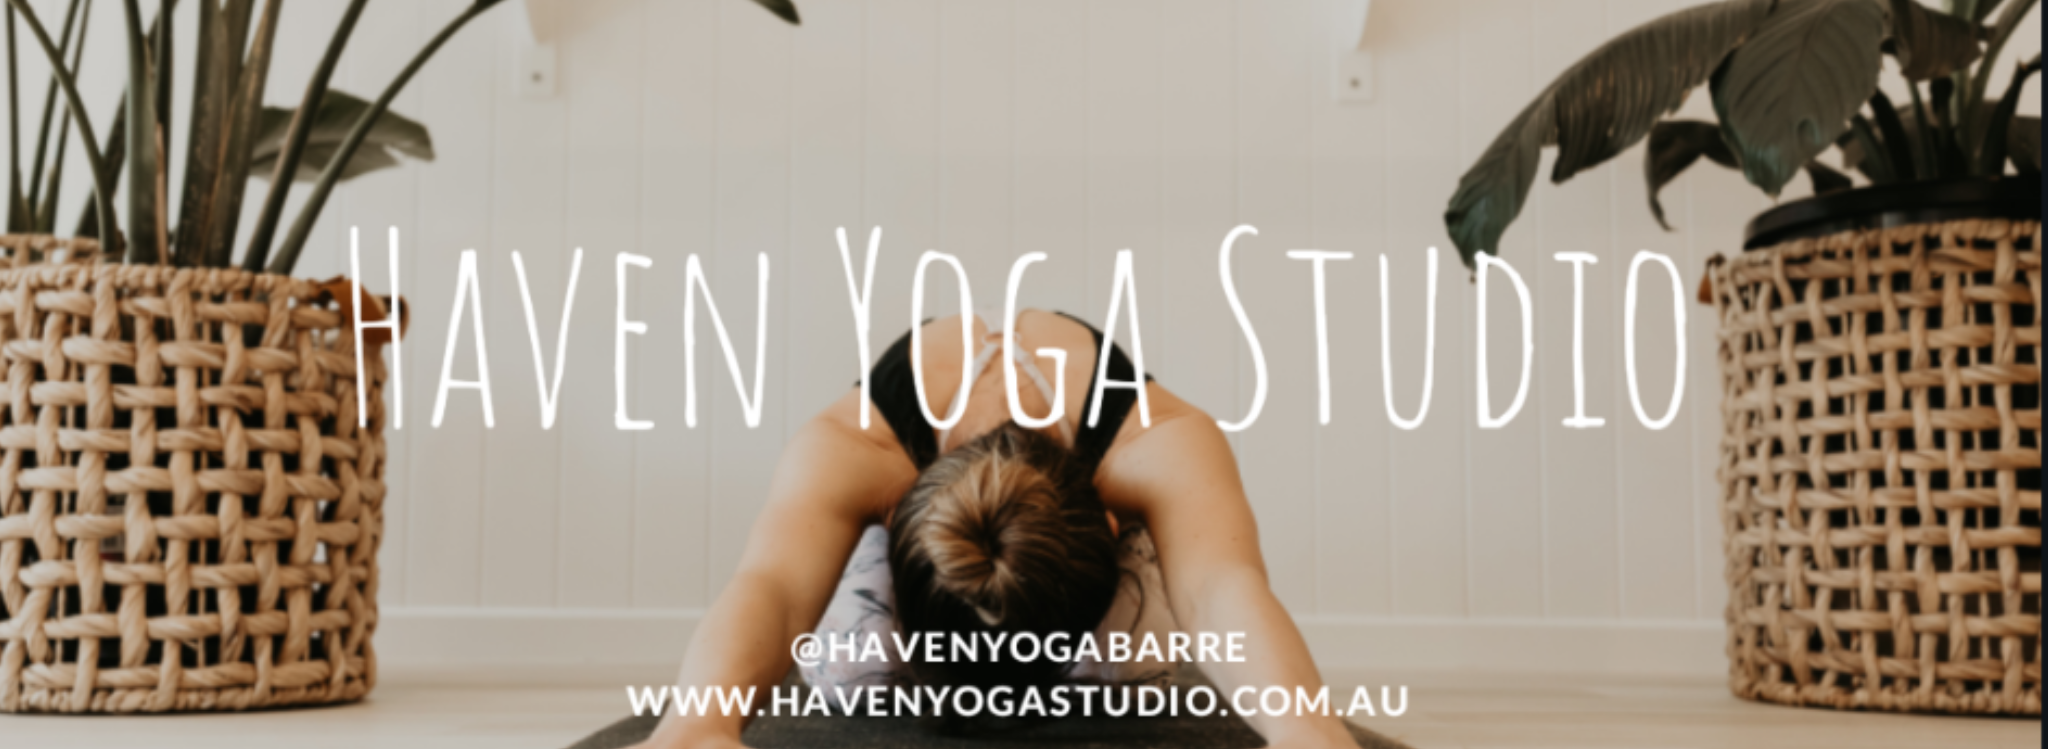 Haven Yoga Studio - Buderim's Best Pilates, Barre, Yoga & Yin